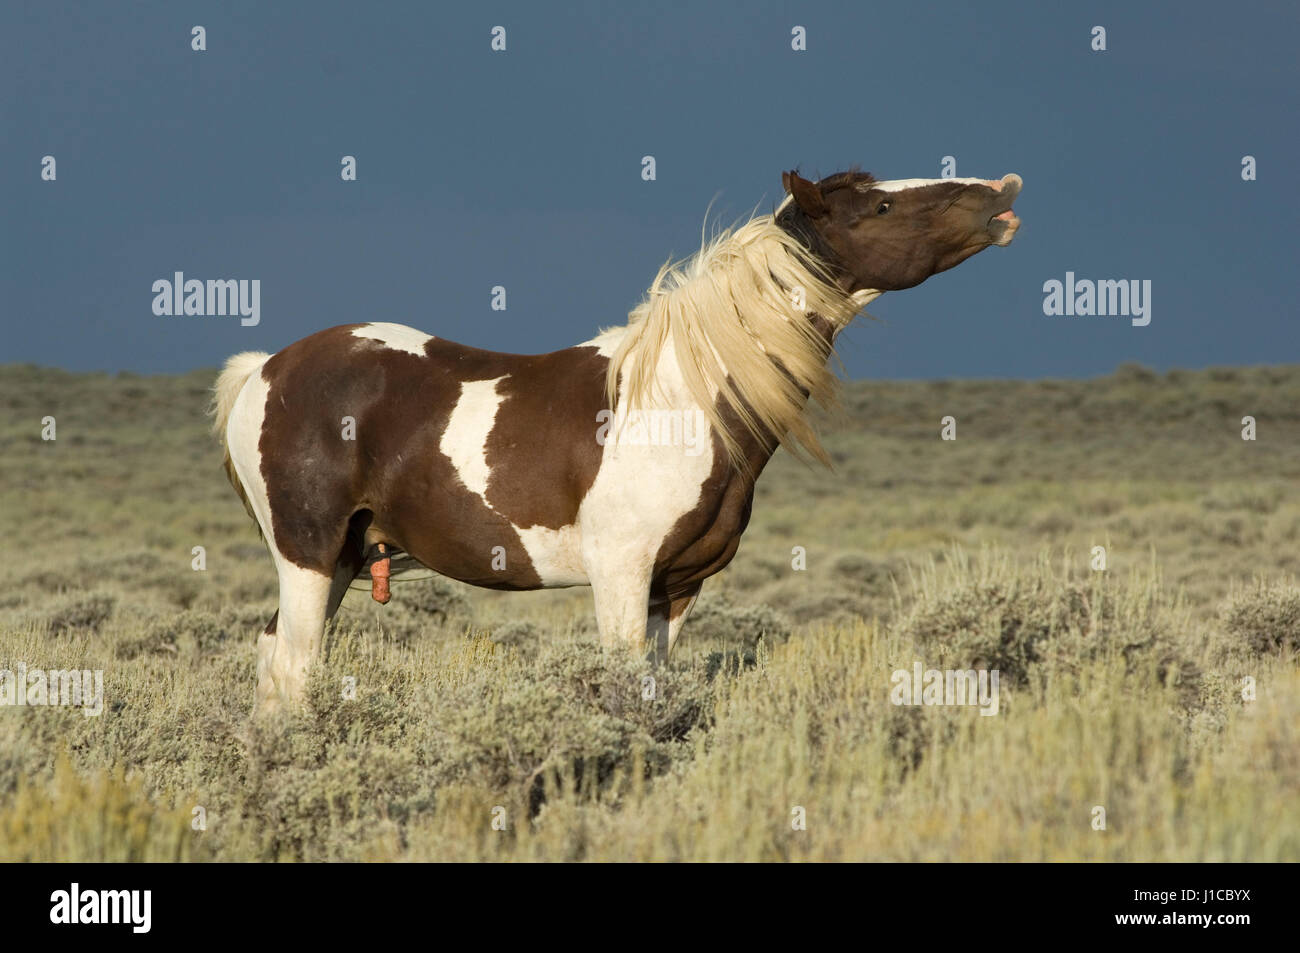 Mustang, étalon, piebald flehming en prairie, Wyoming, USA Banque D'Images